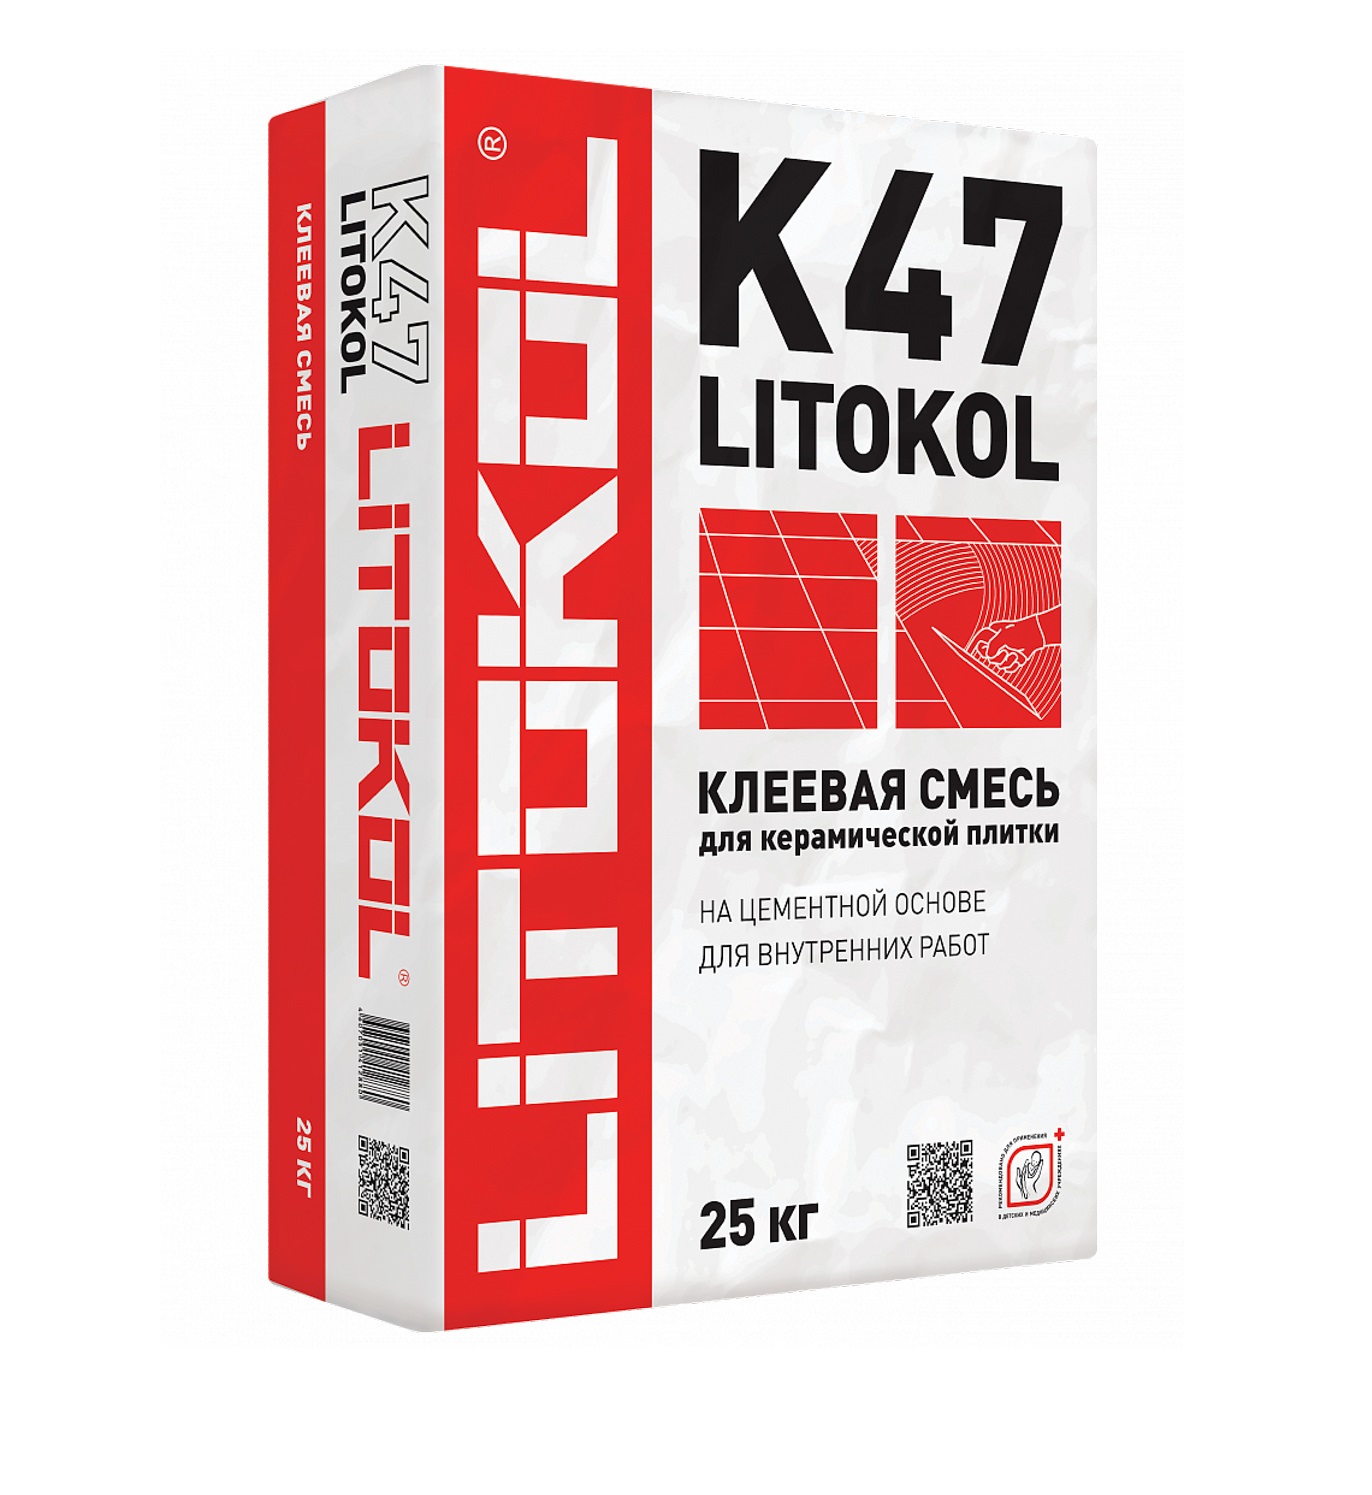   LITOKOL K47 ( 47) 25 